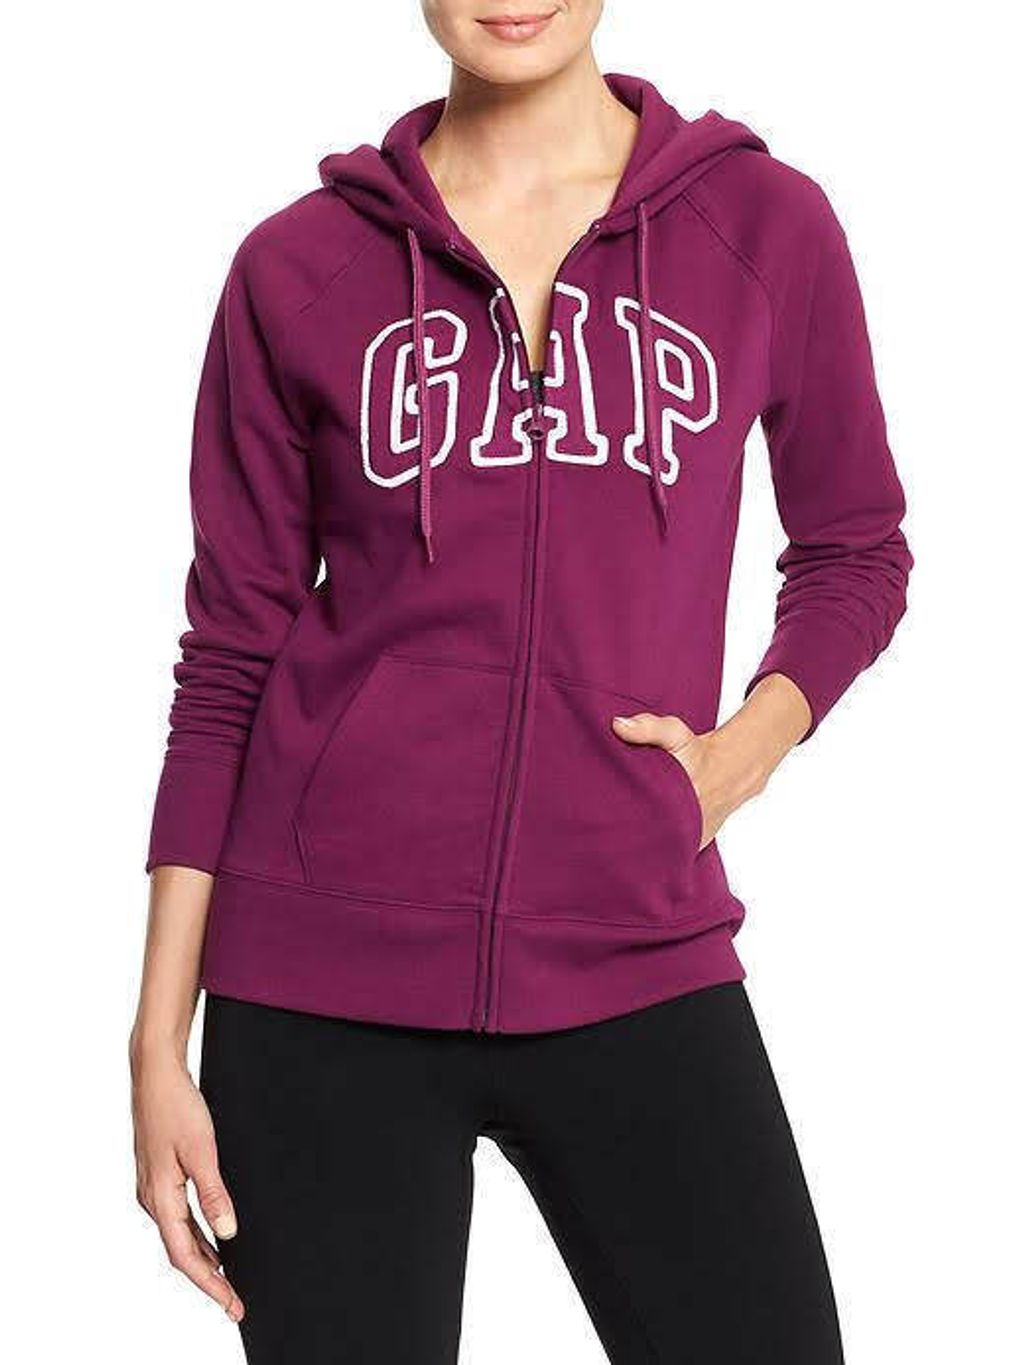 gap Raglan arch logo zip hoodie $13.35 w tax